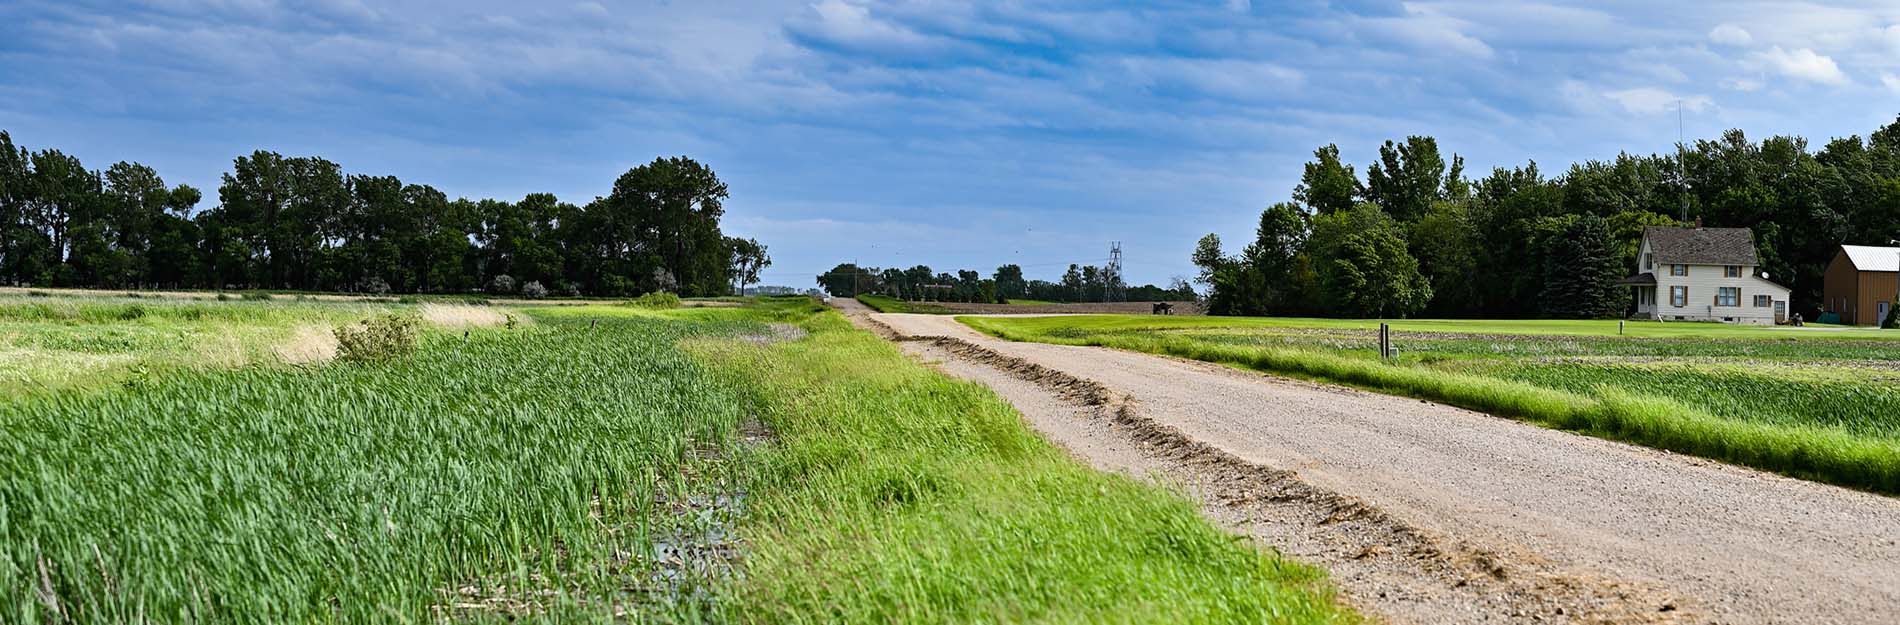 wide view of a dirt road in rural North Dakota